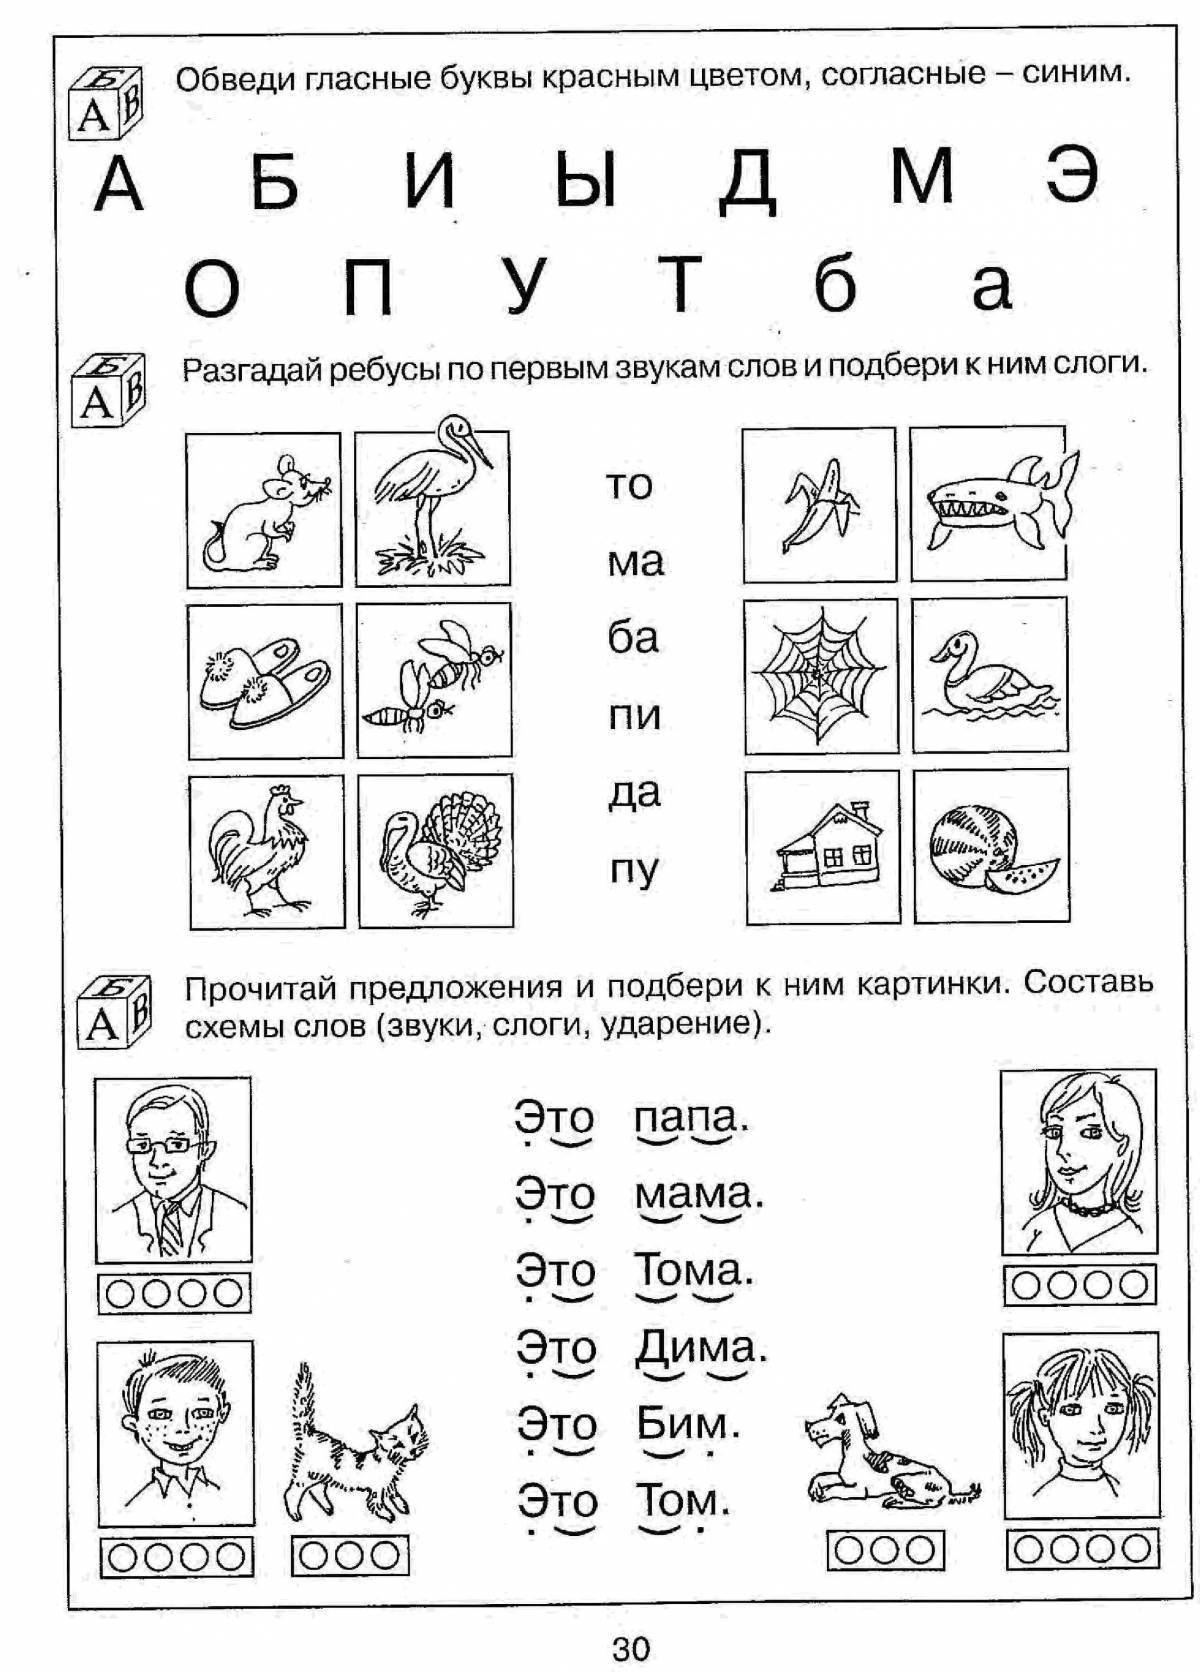 Vowels and consonants for preschoolers #8